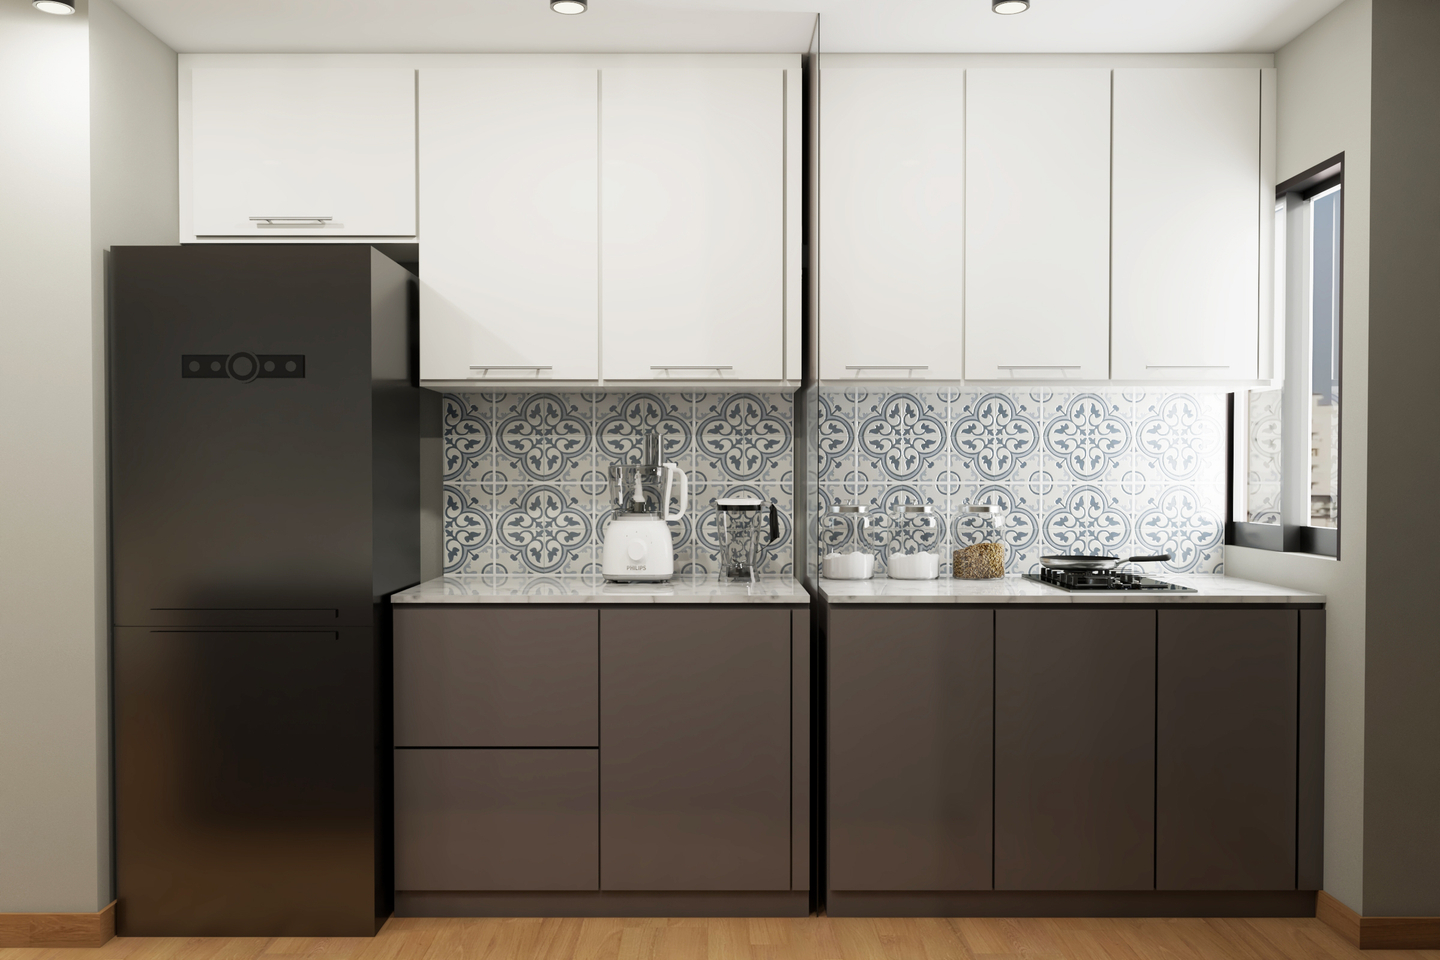 Parallel White And Grey Kitchen Design - Livspace